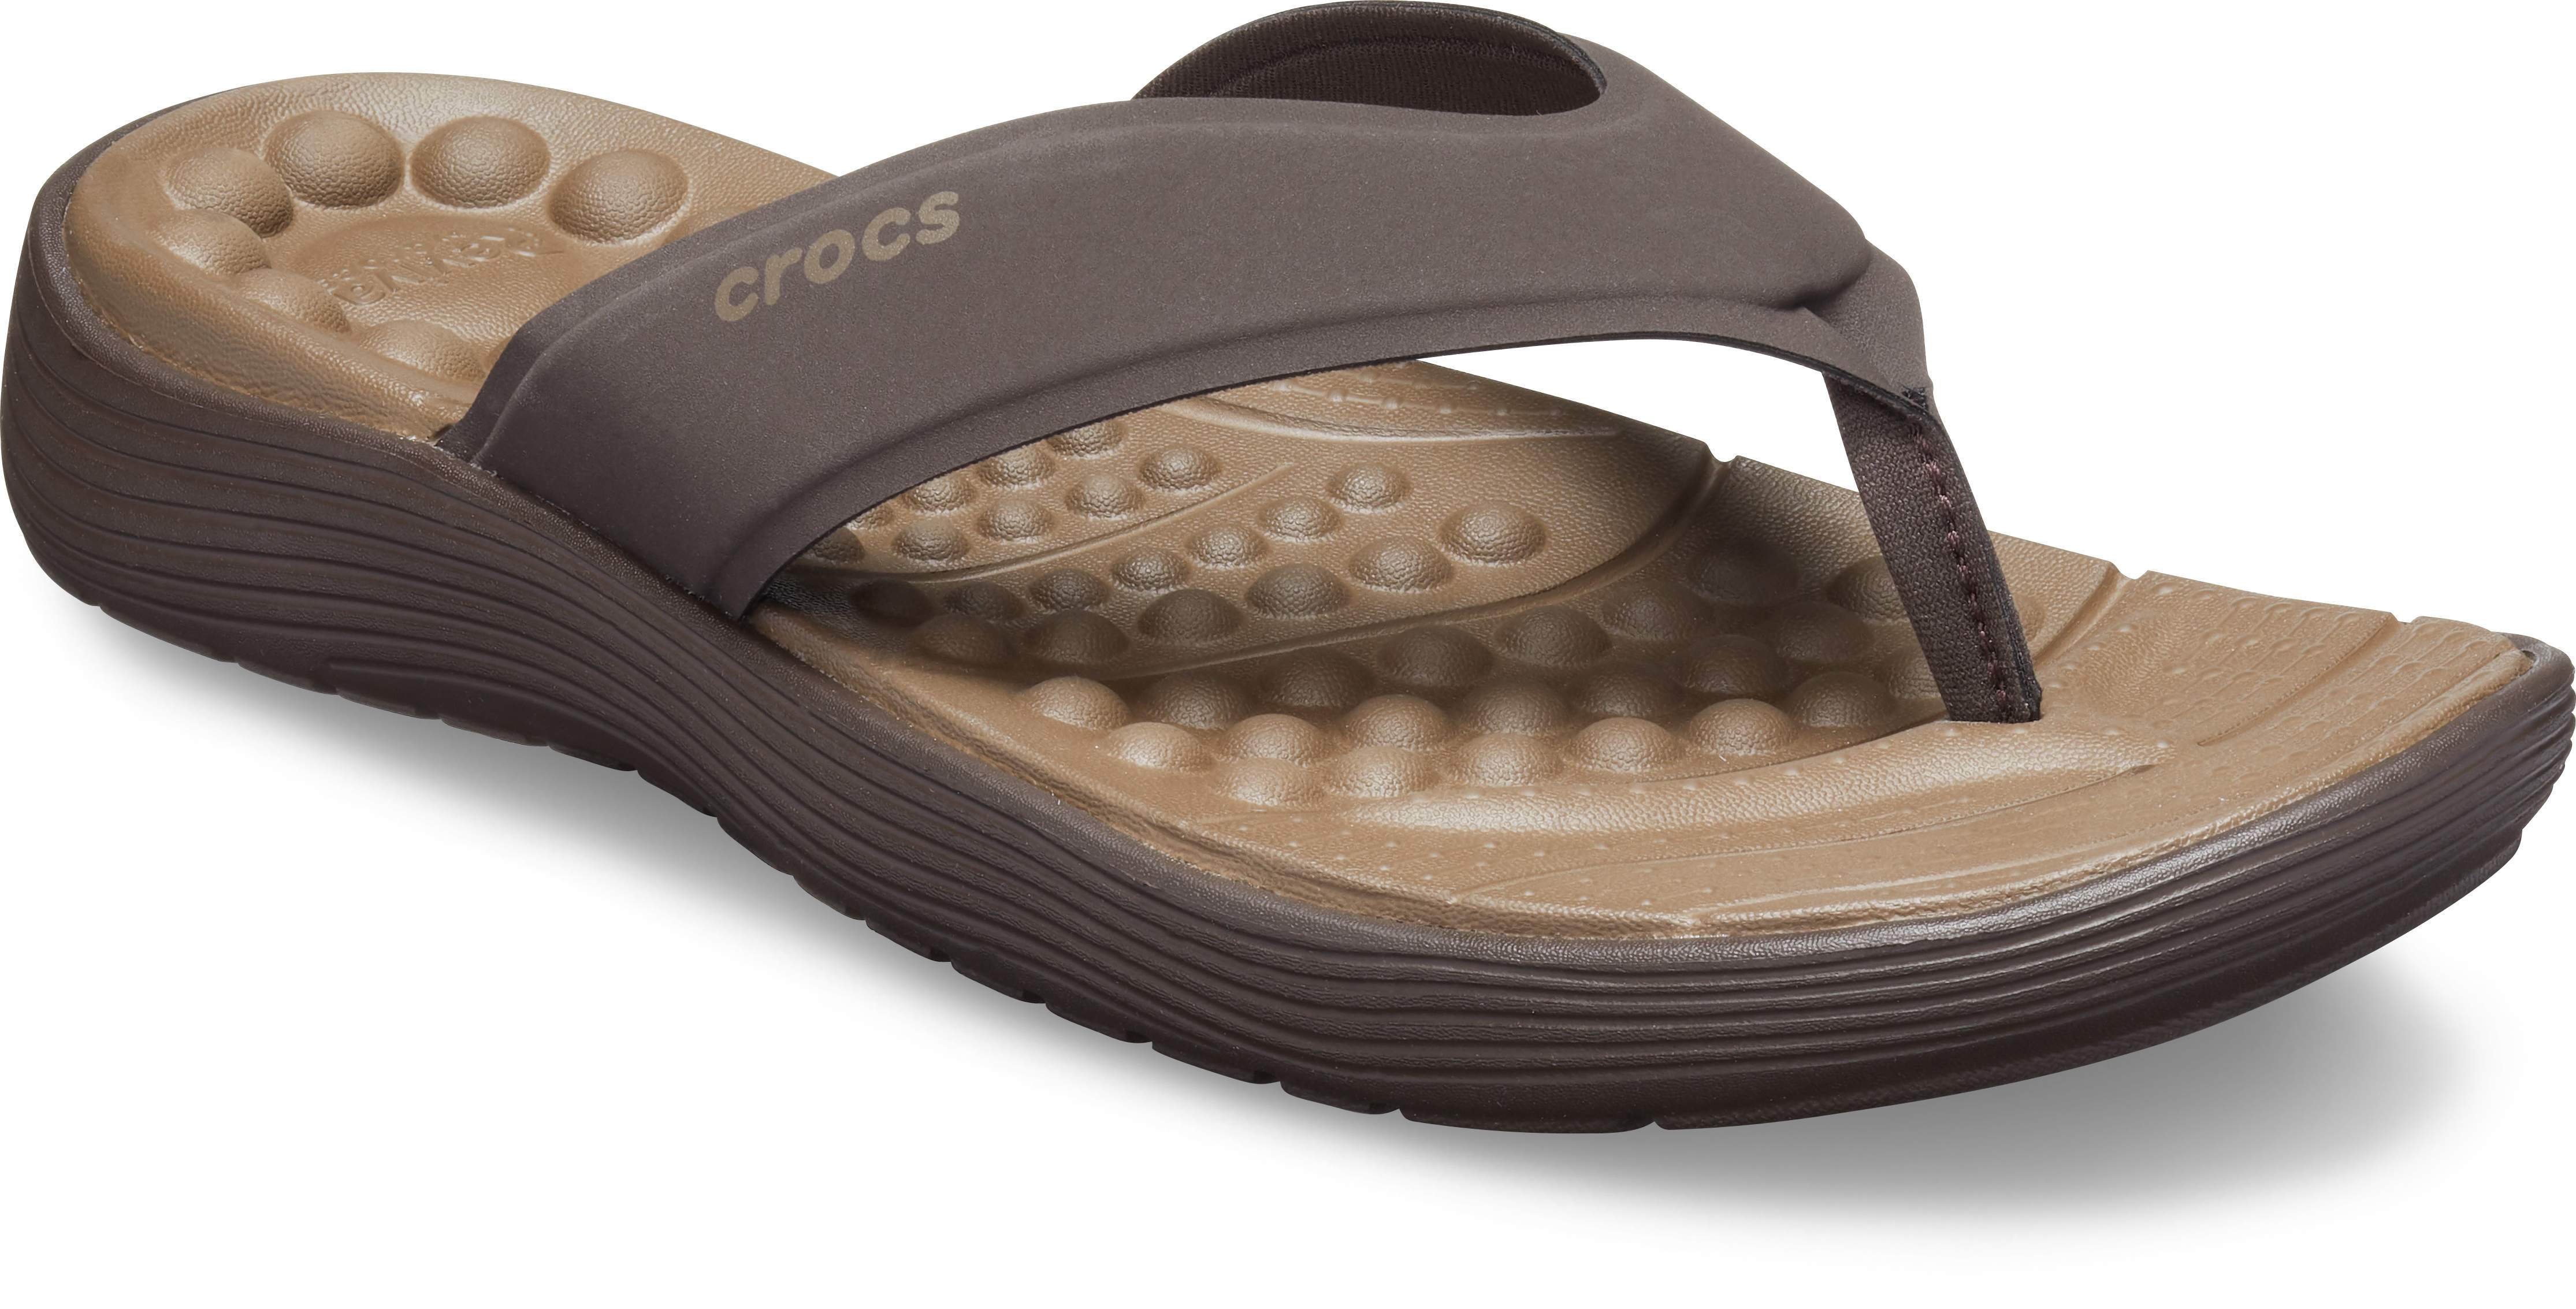 mens brown leather crocs